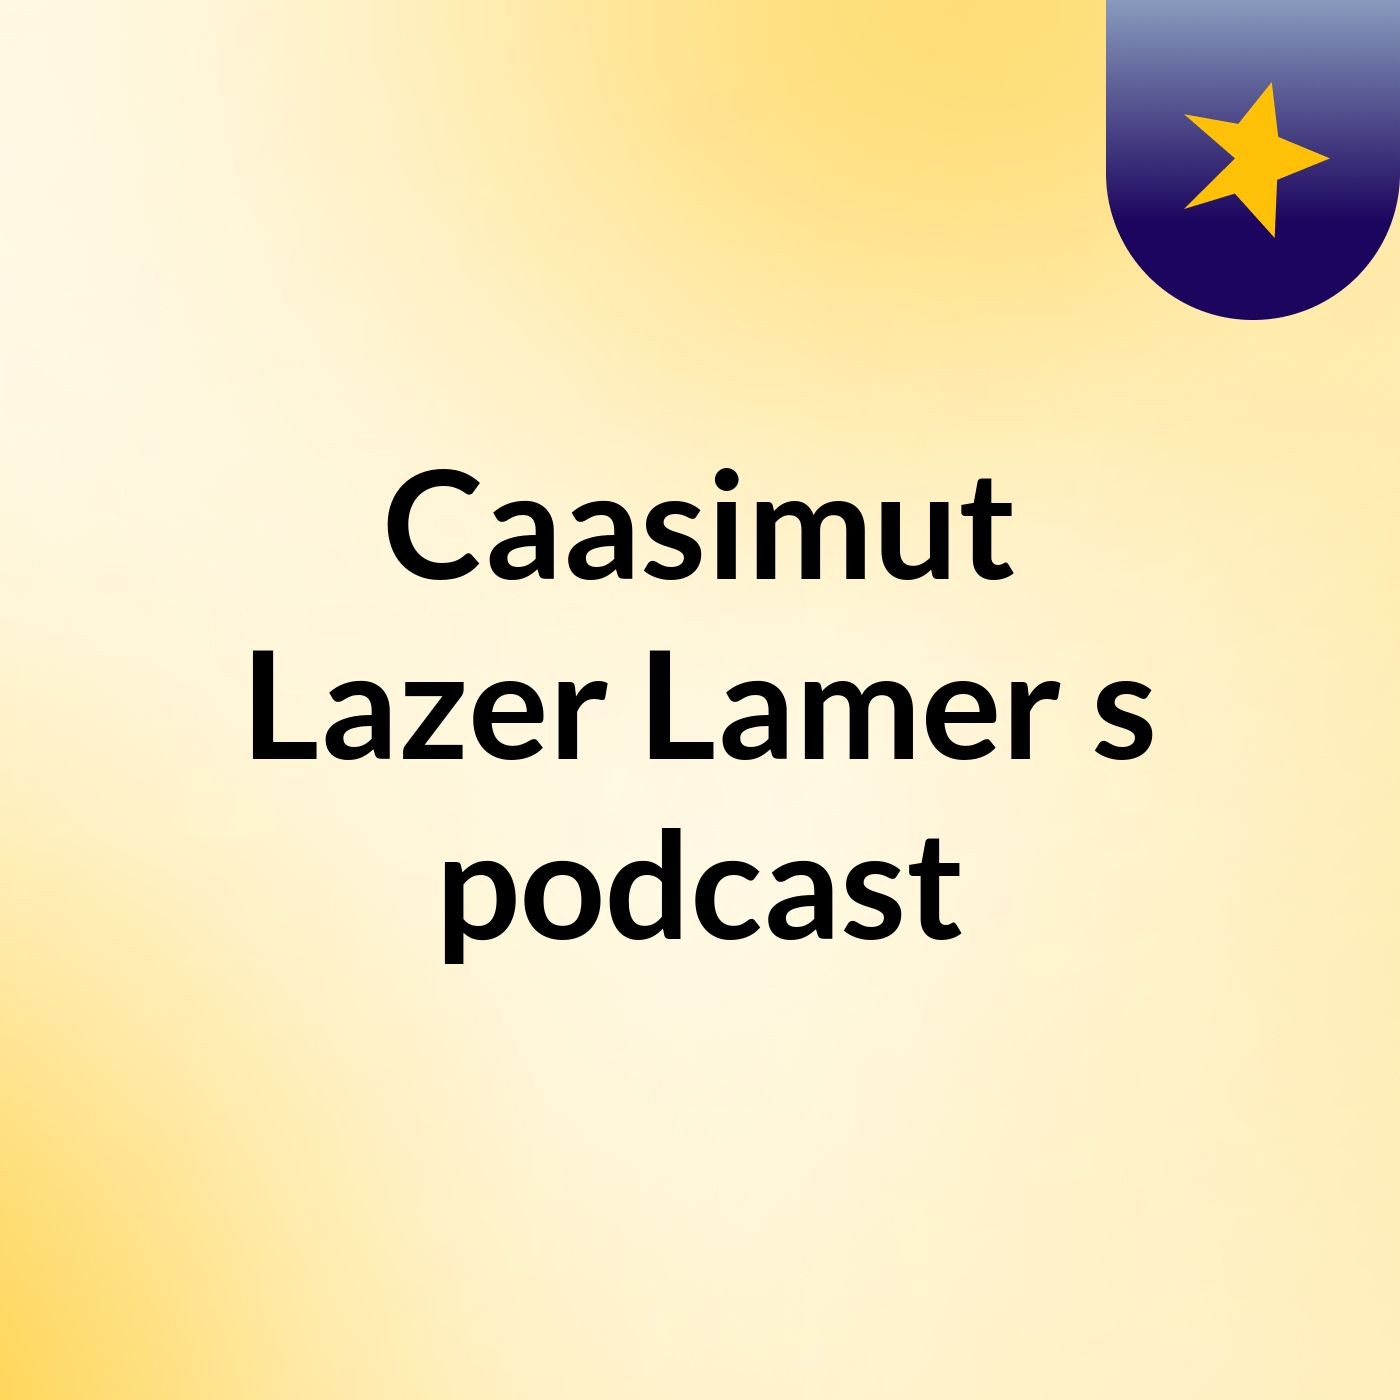 Caasimut Lazer Lamer's podcast